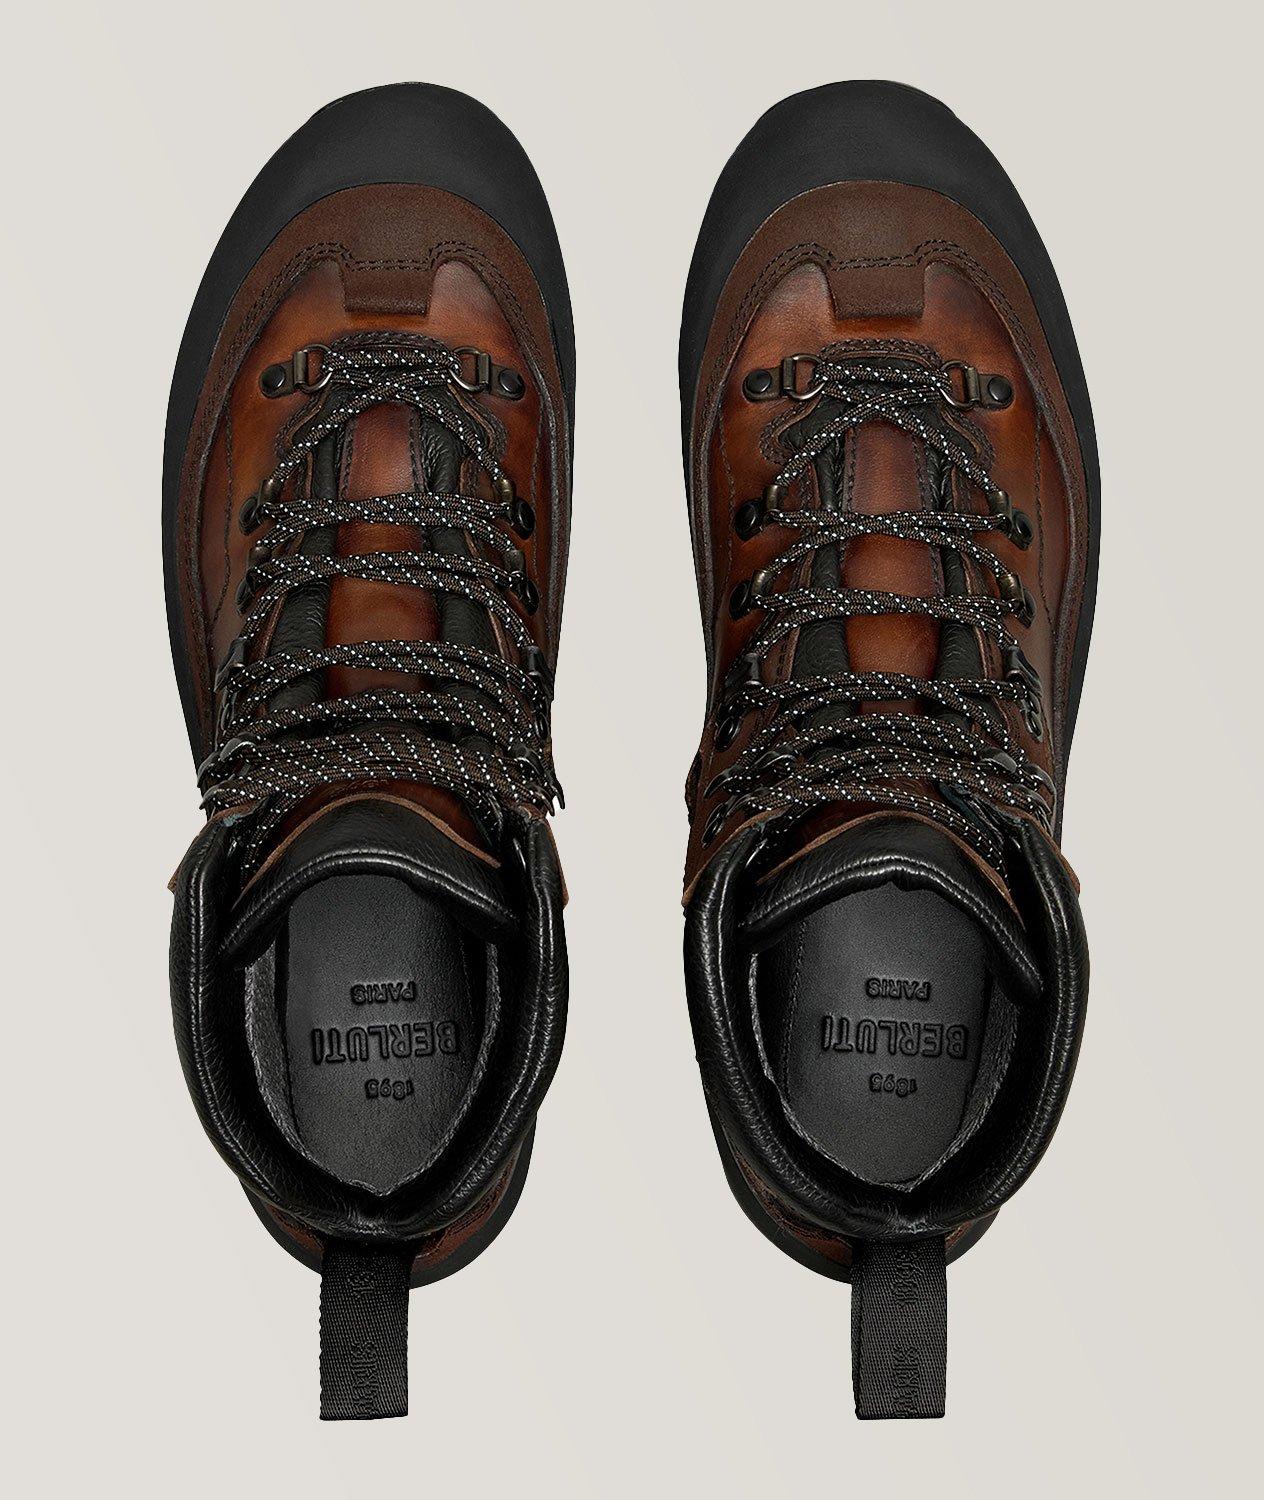 Aspen Leather Alpine Boot image 2